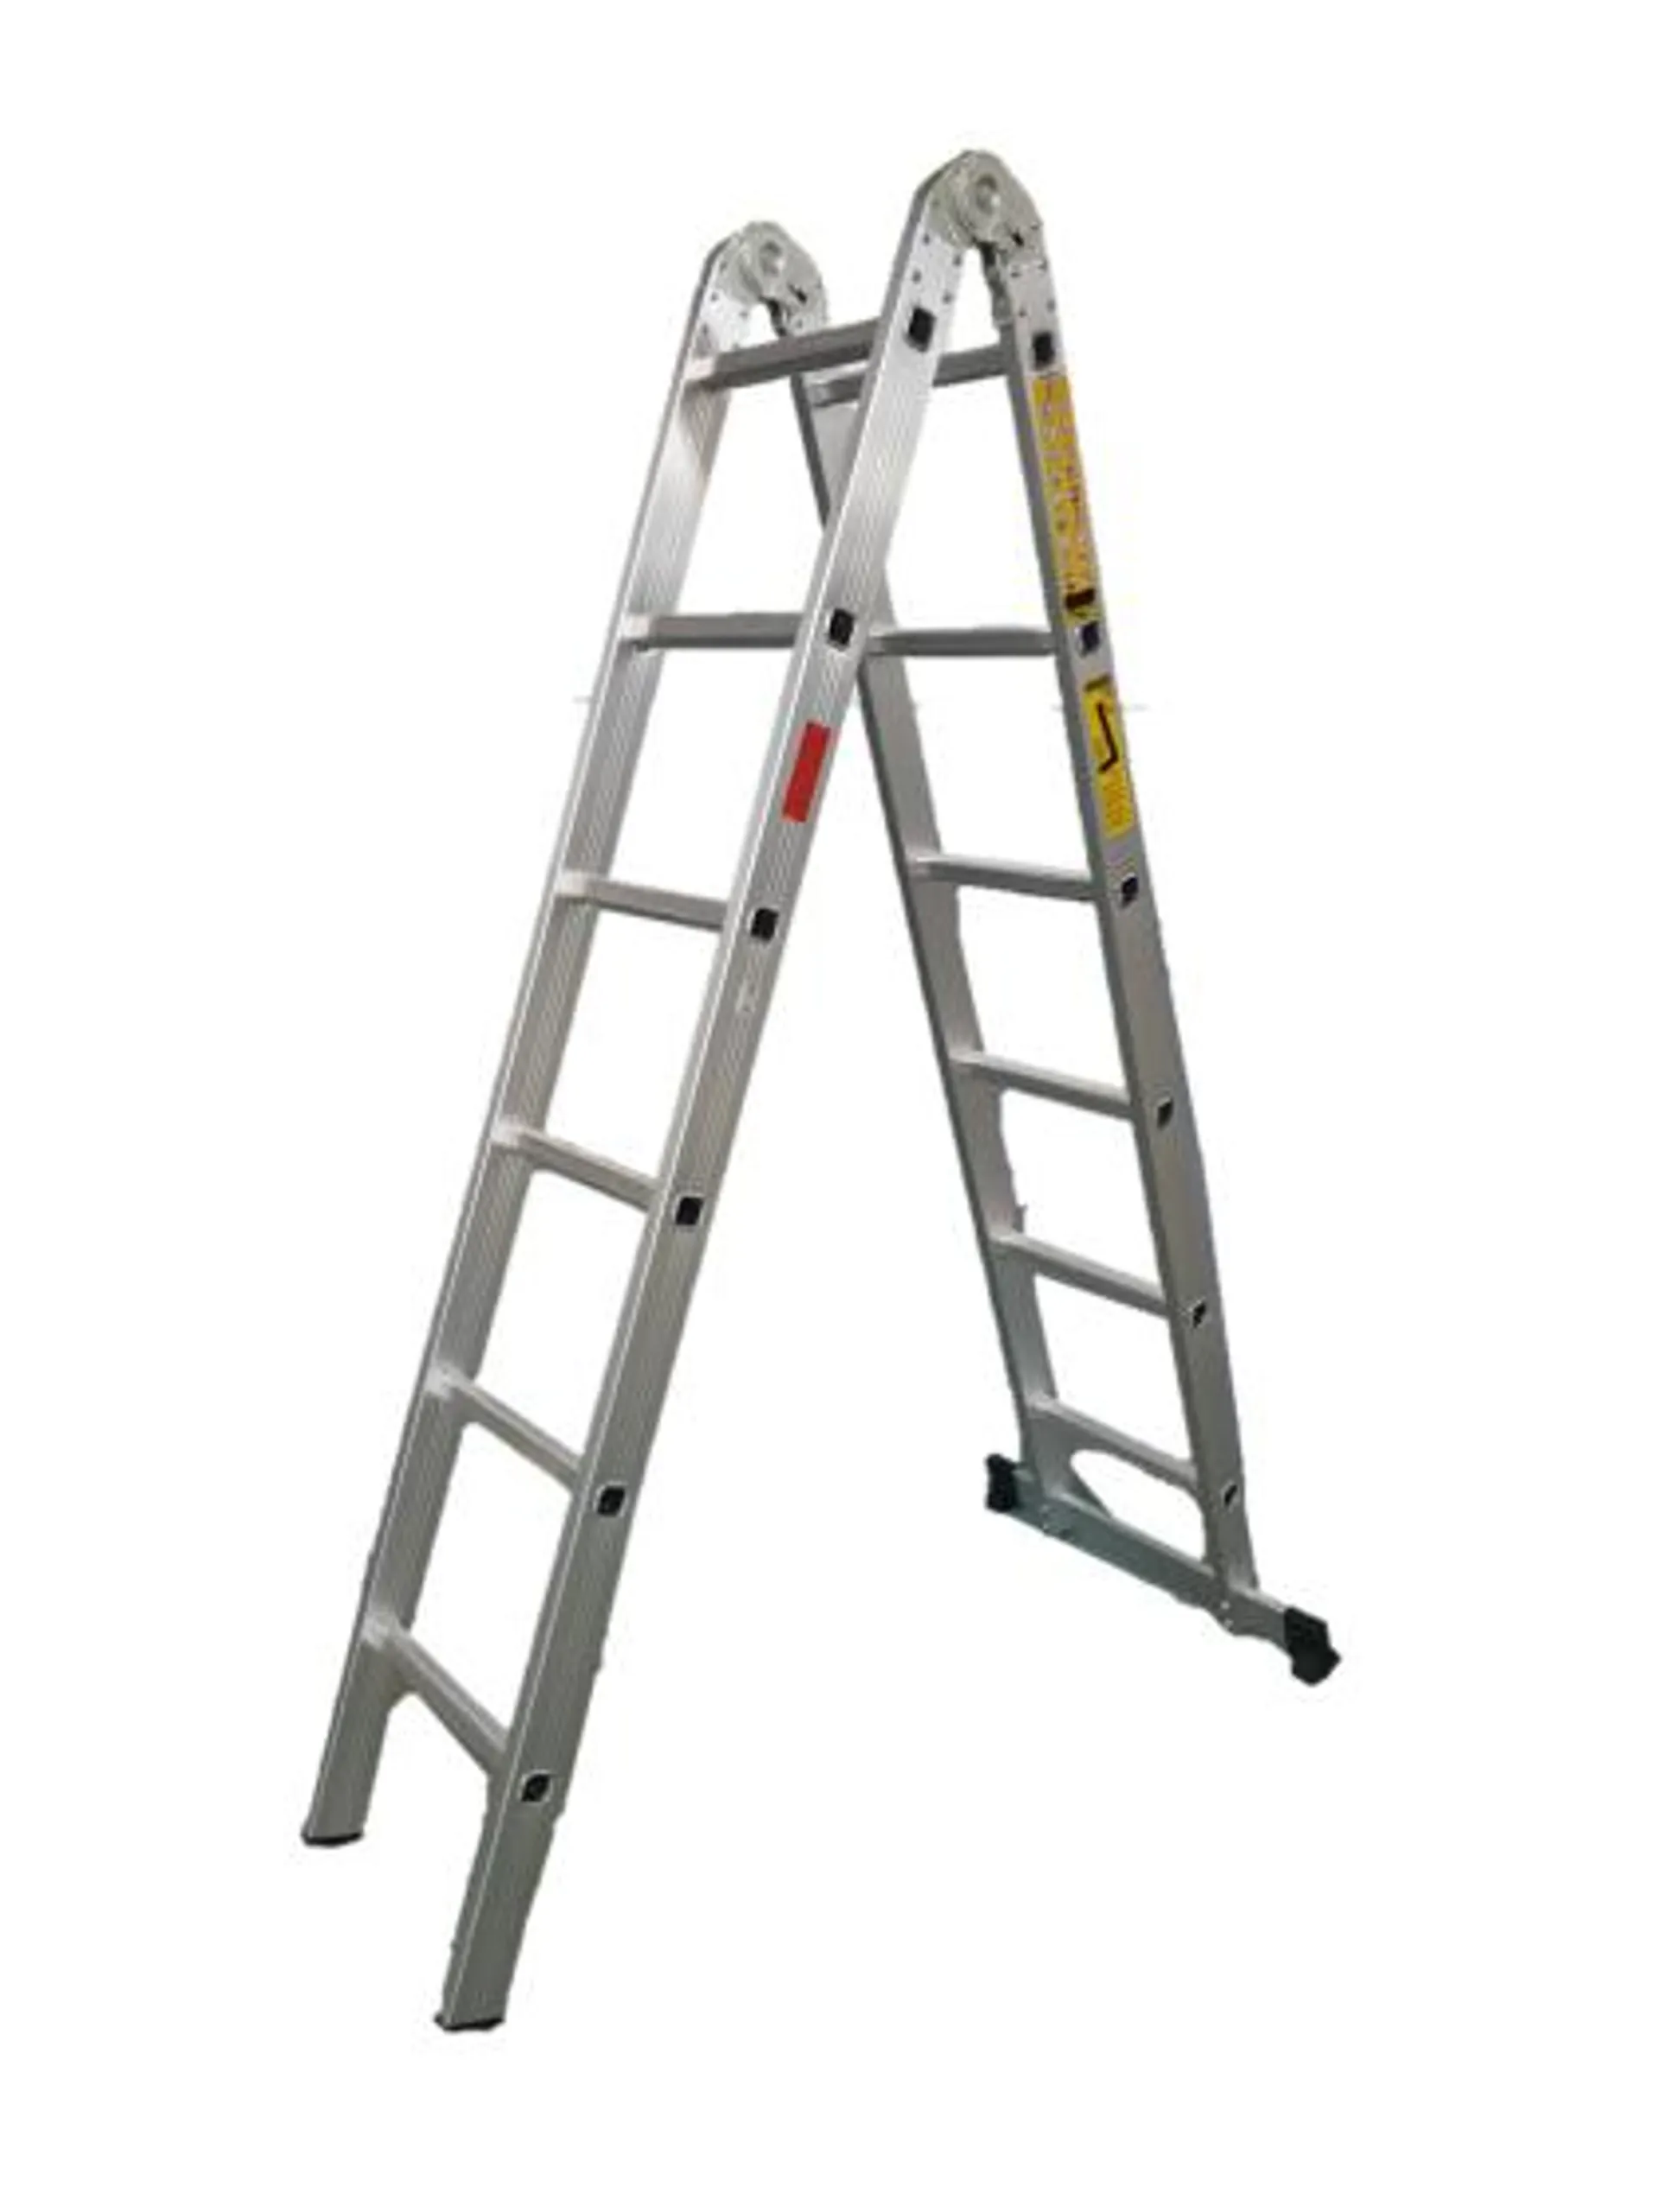 Afriladder Ladder Alu 2 Hinge Version Multi Purpose